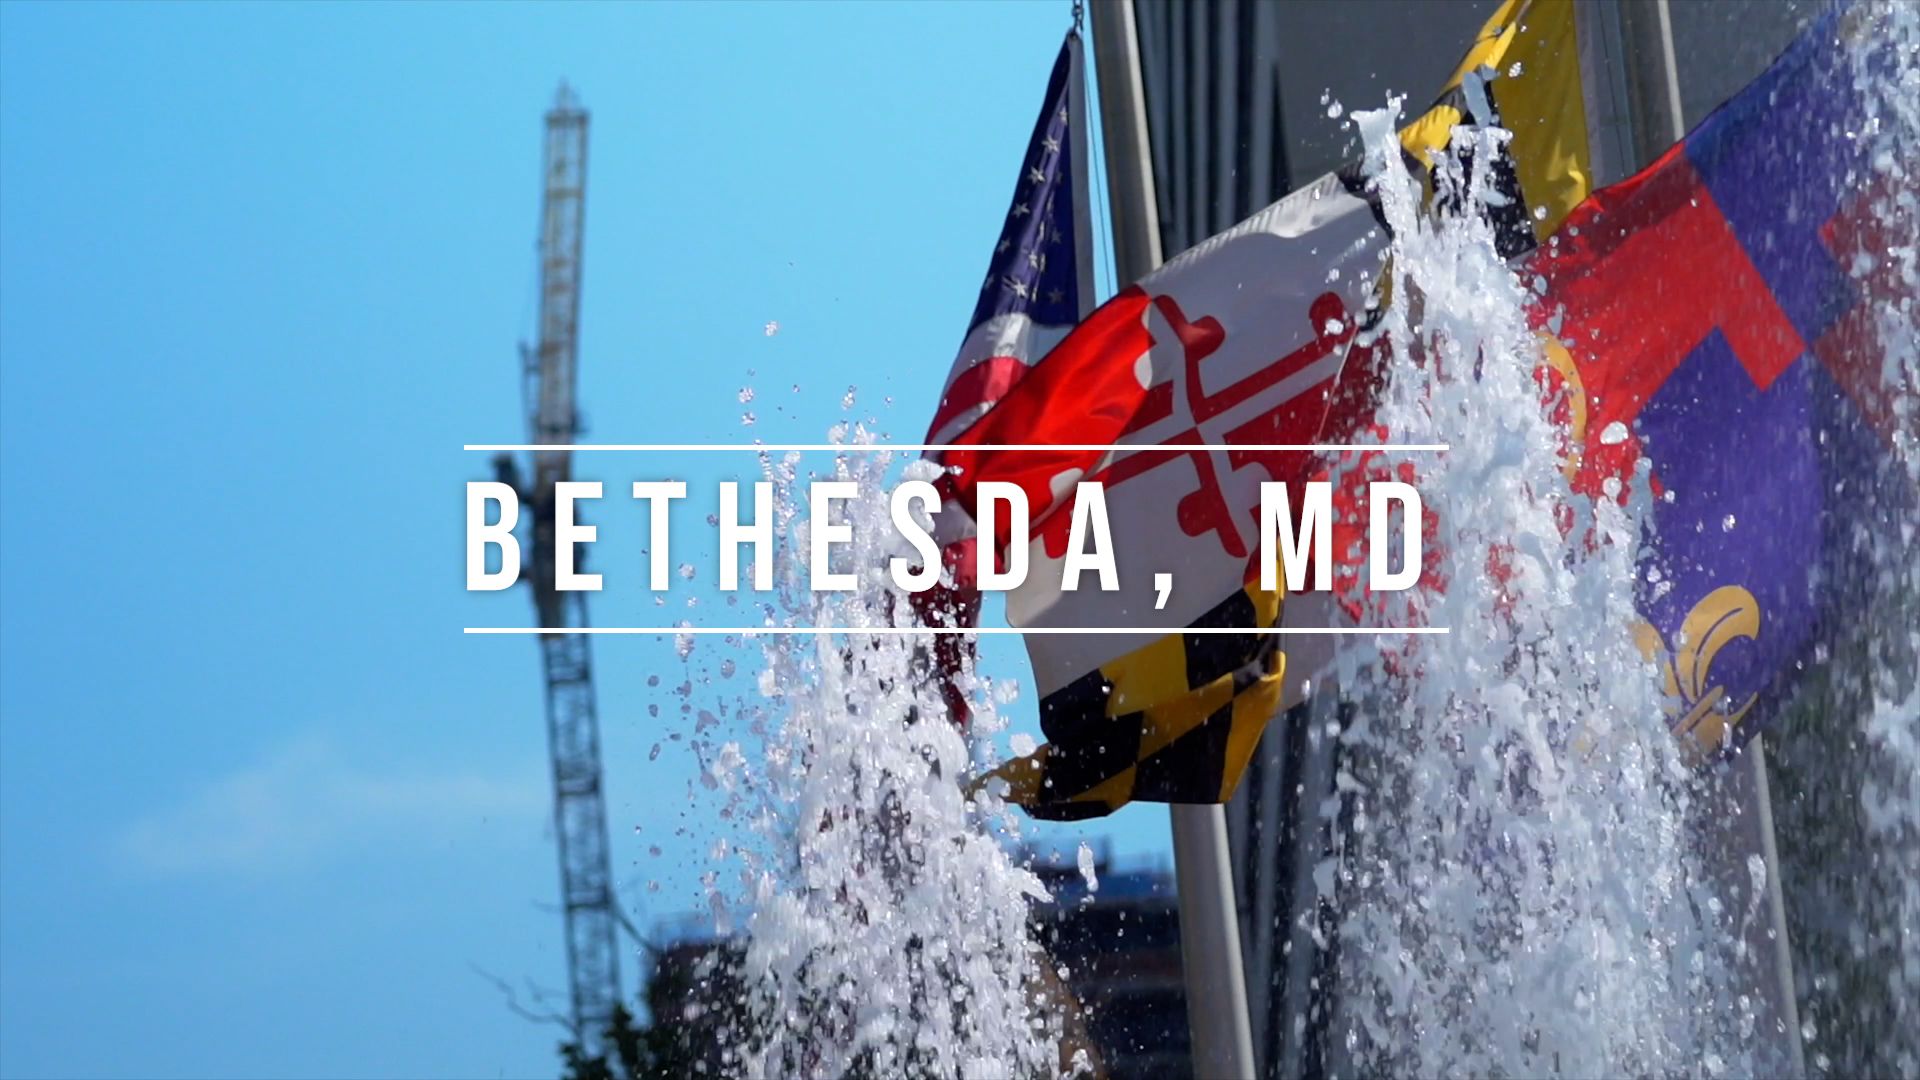 Bethesda, MD